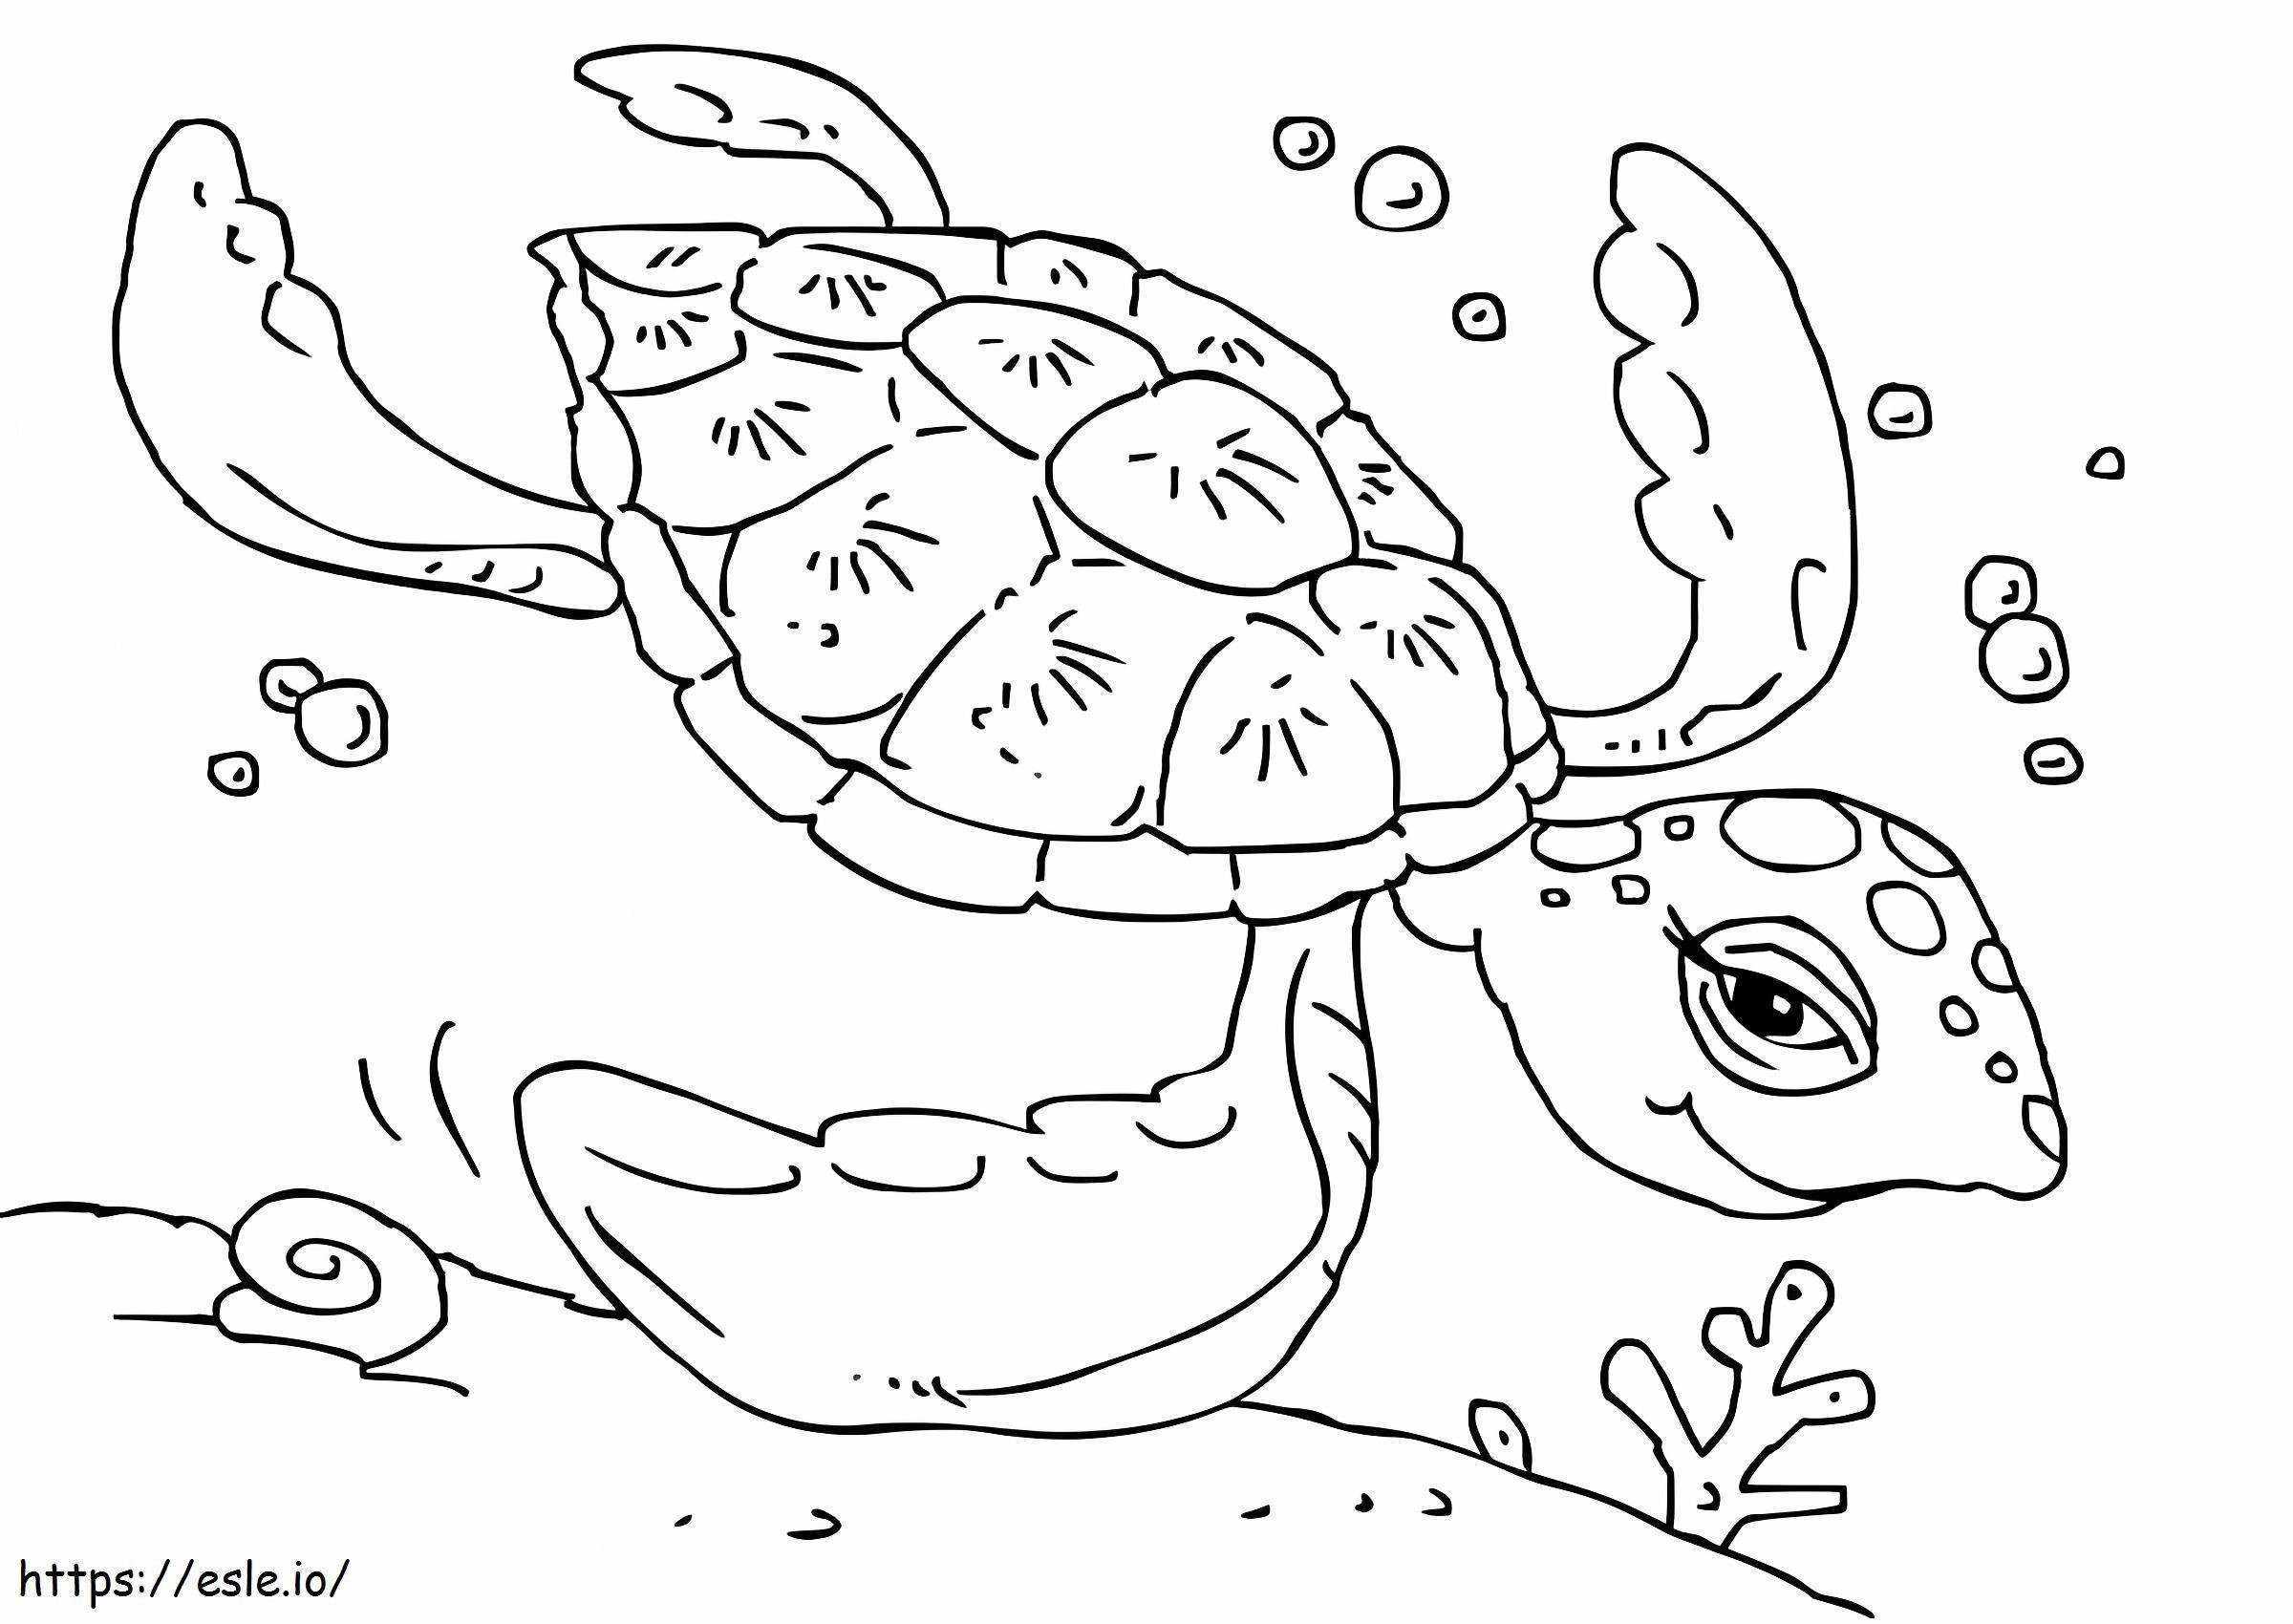 Natación de tortugas marinas 1 para colorear